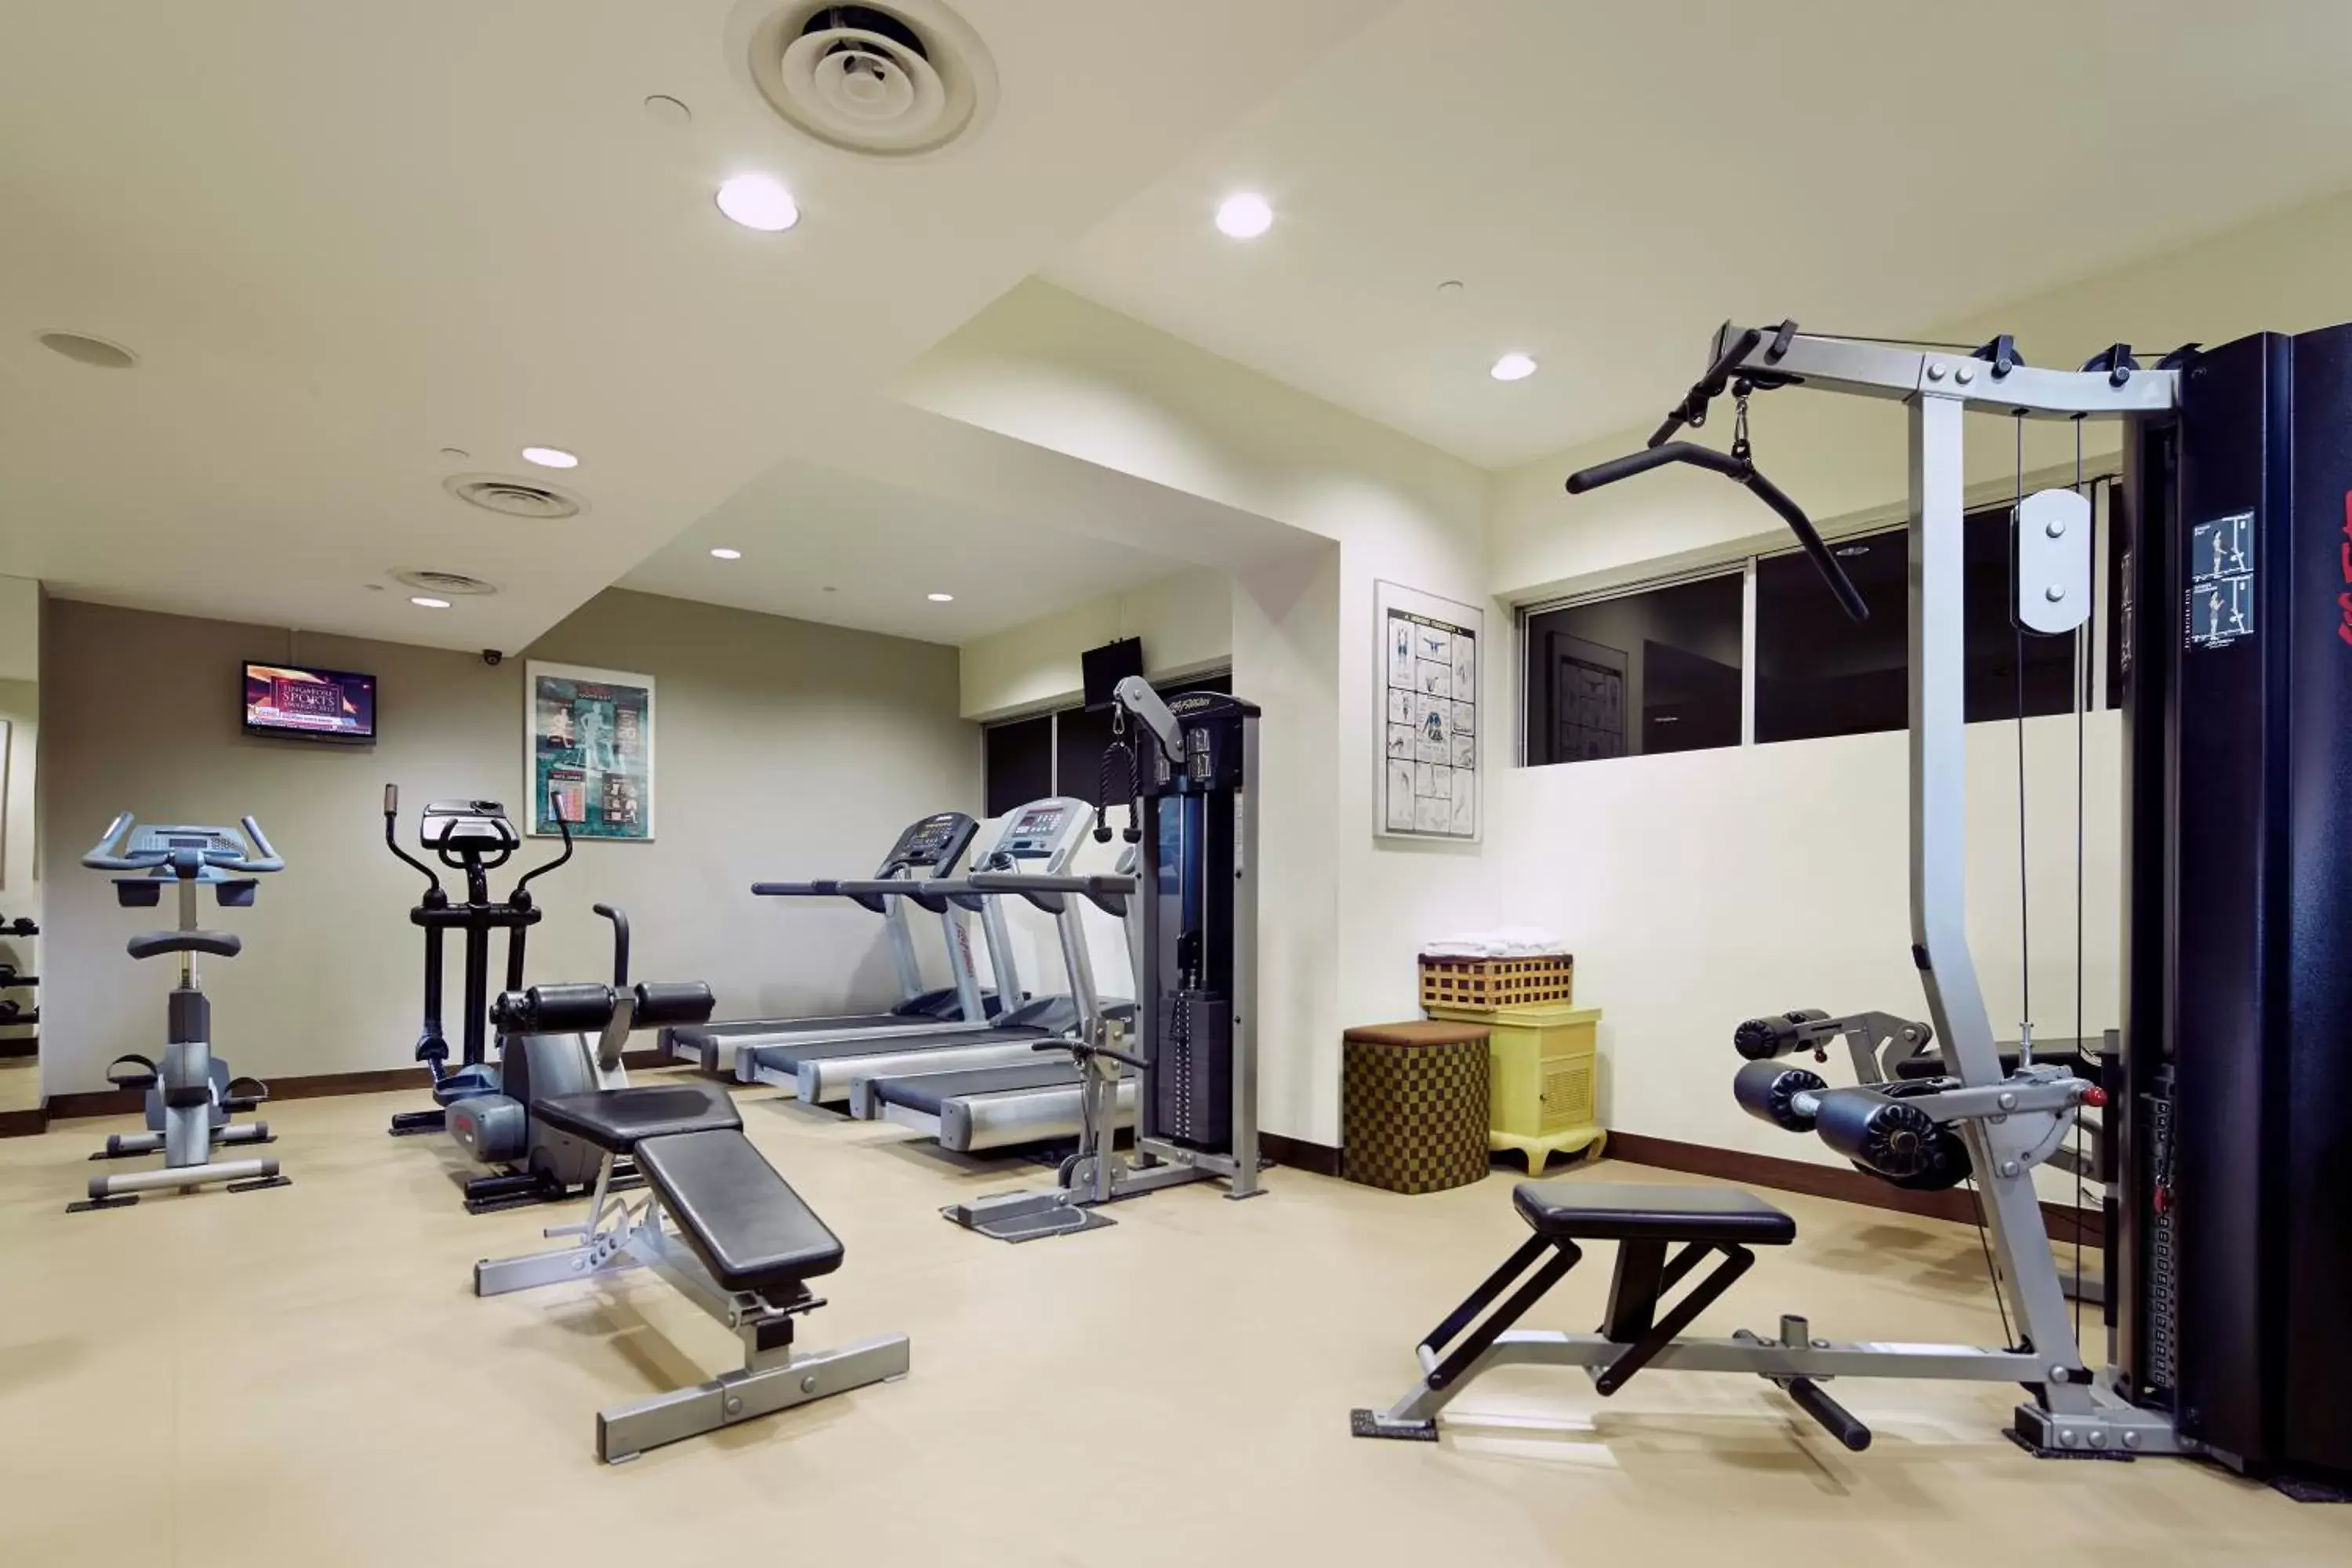 Fitness centre/facilities, Fitness Center/Facilities in Furama RiverFront